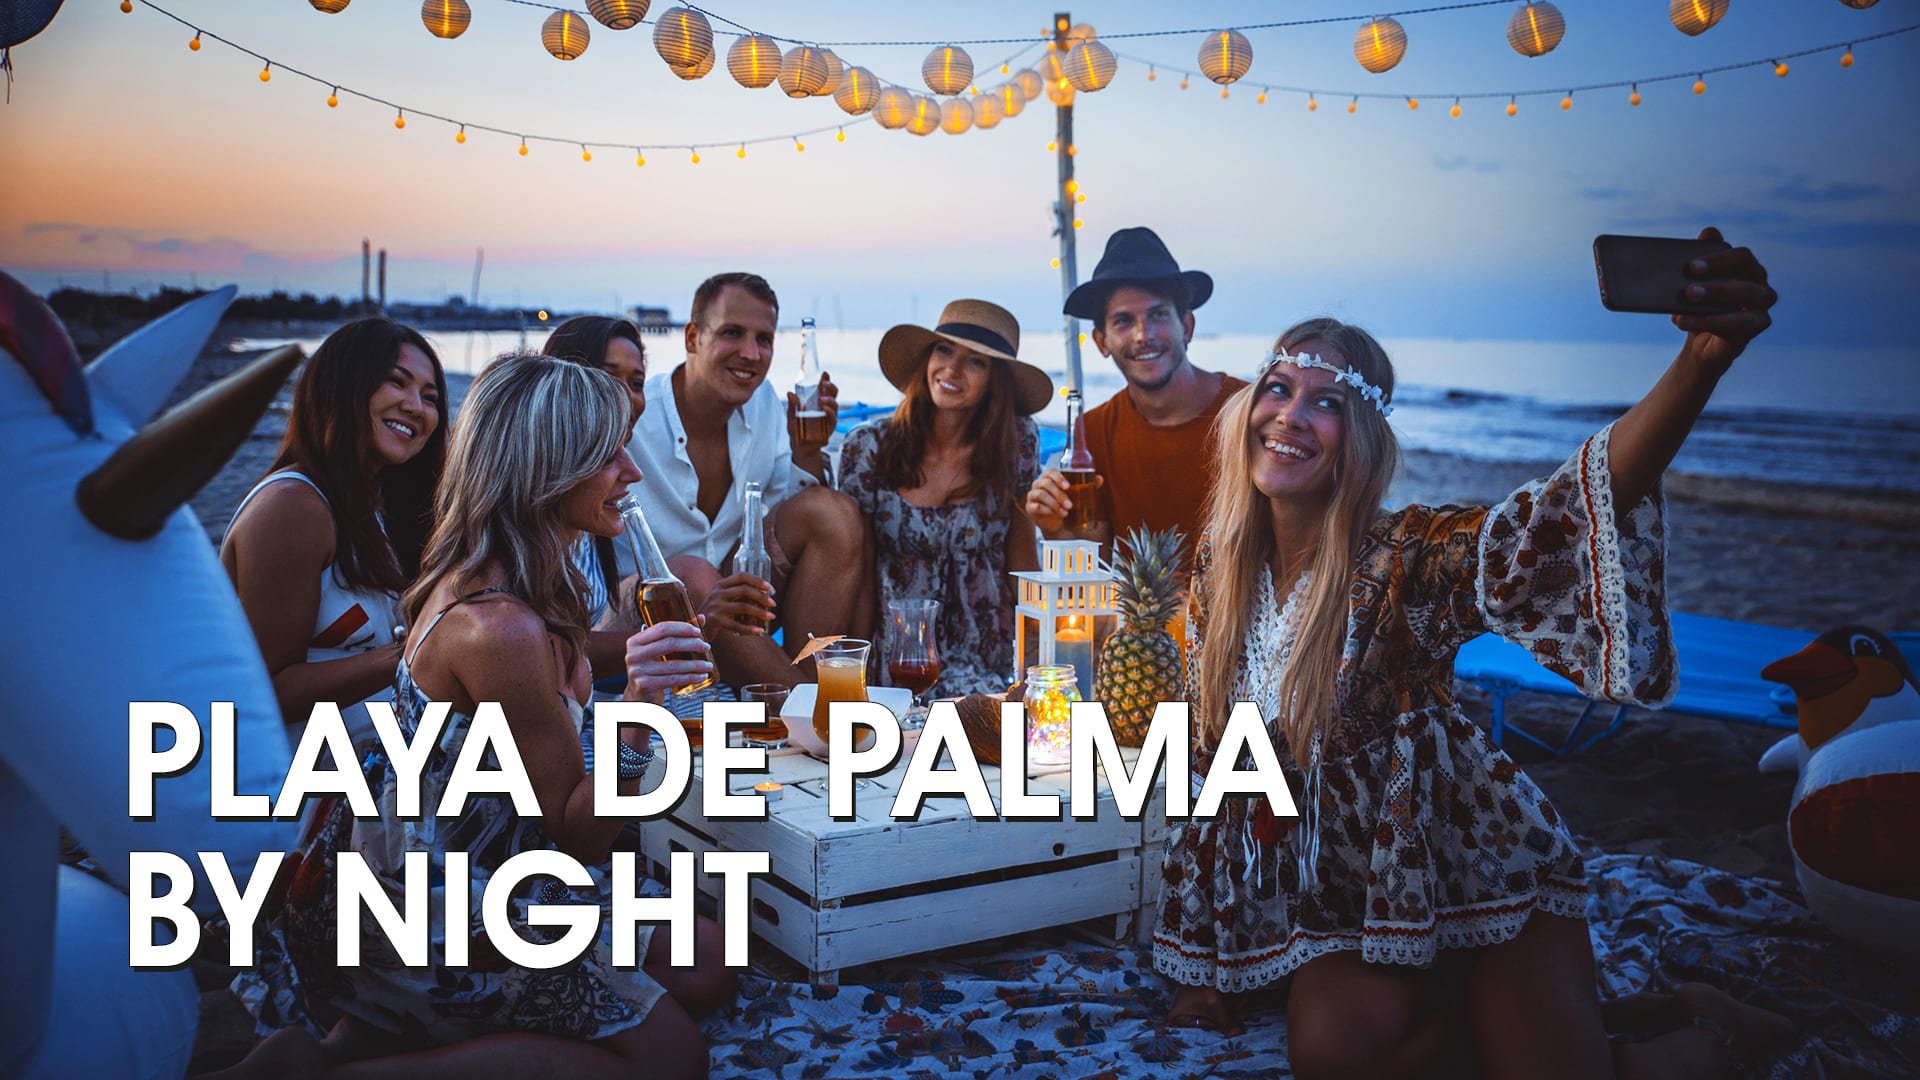 Playa de Palma by night